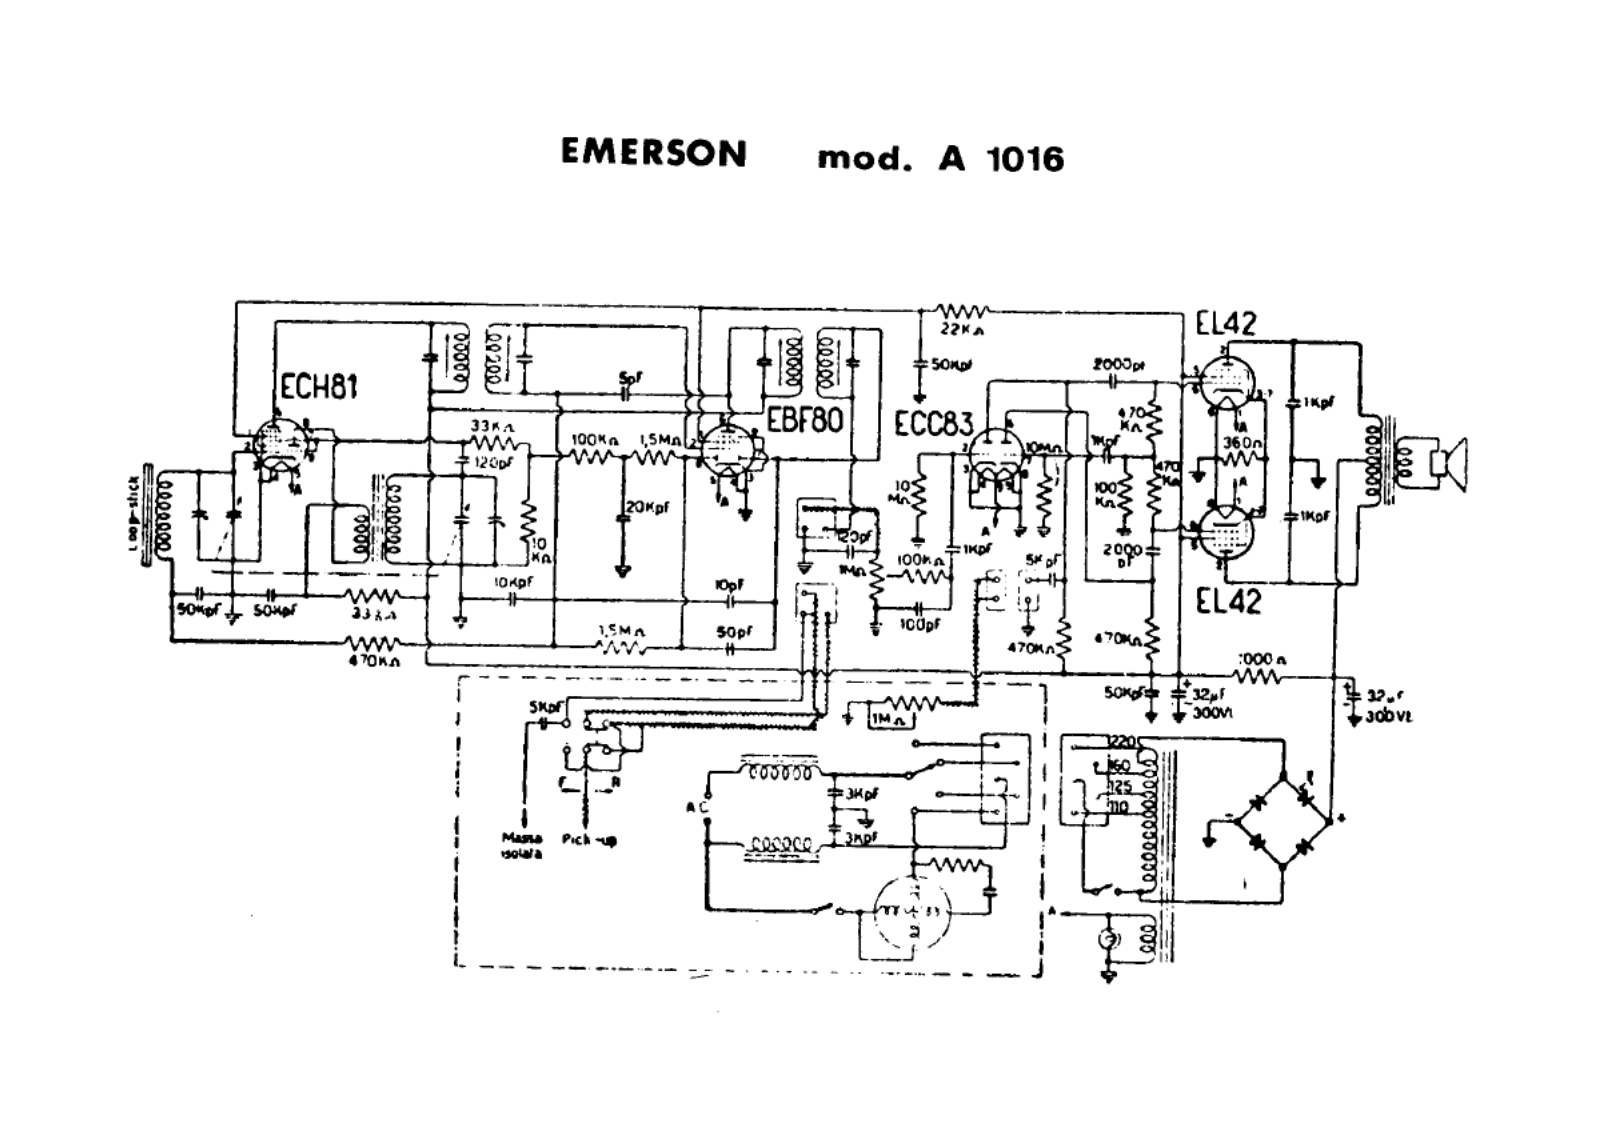 Emerson a1016 schematic